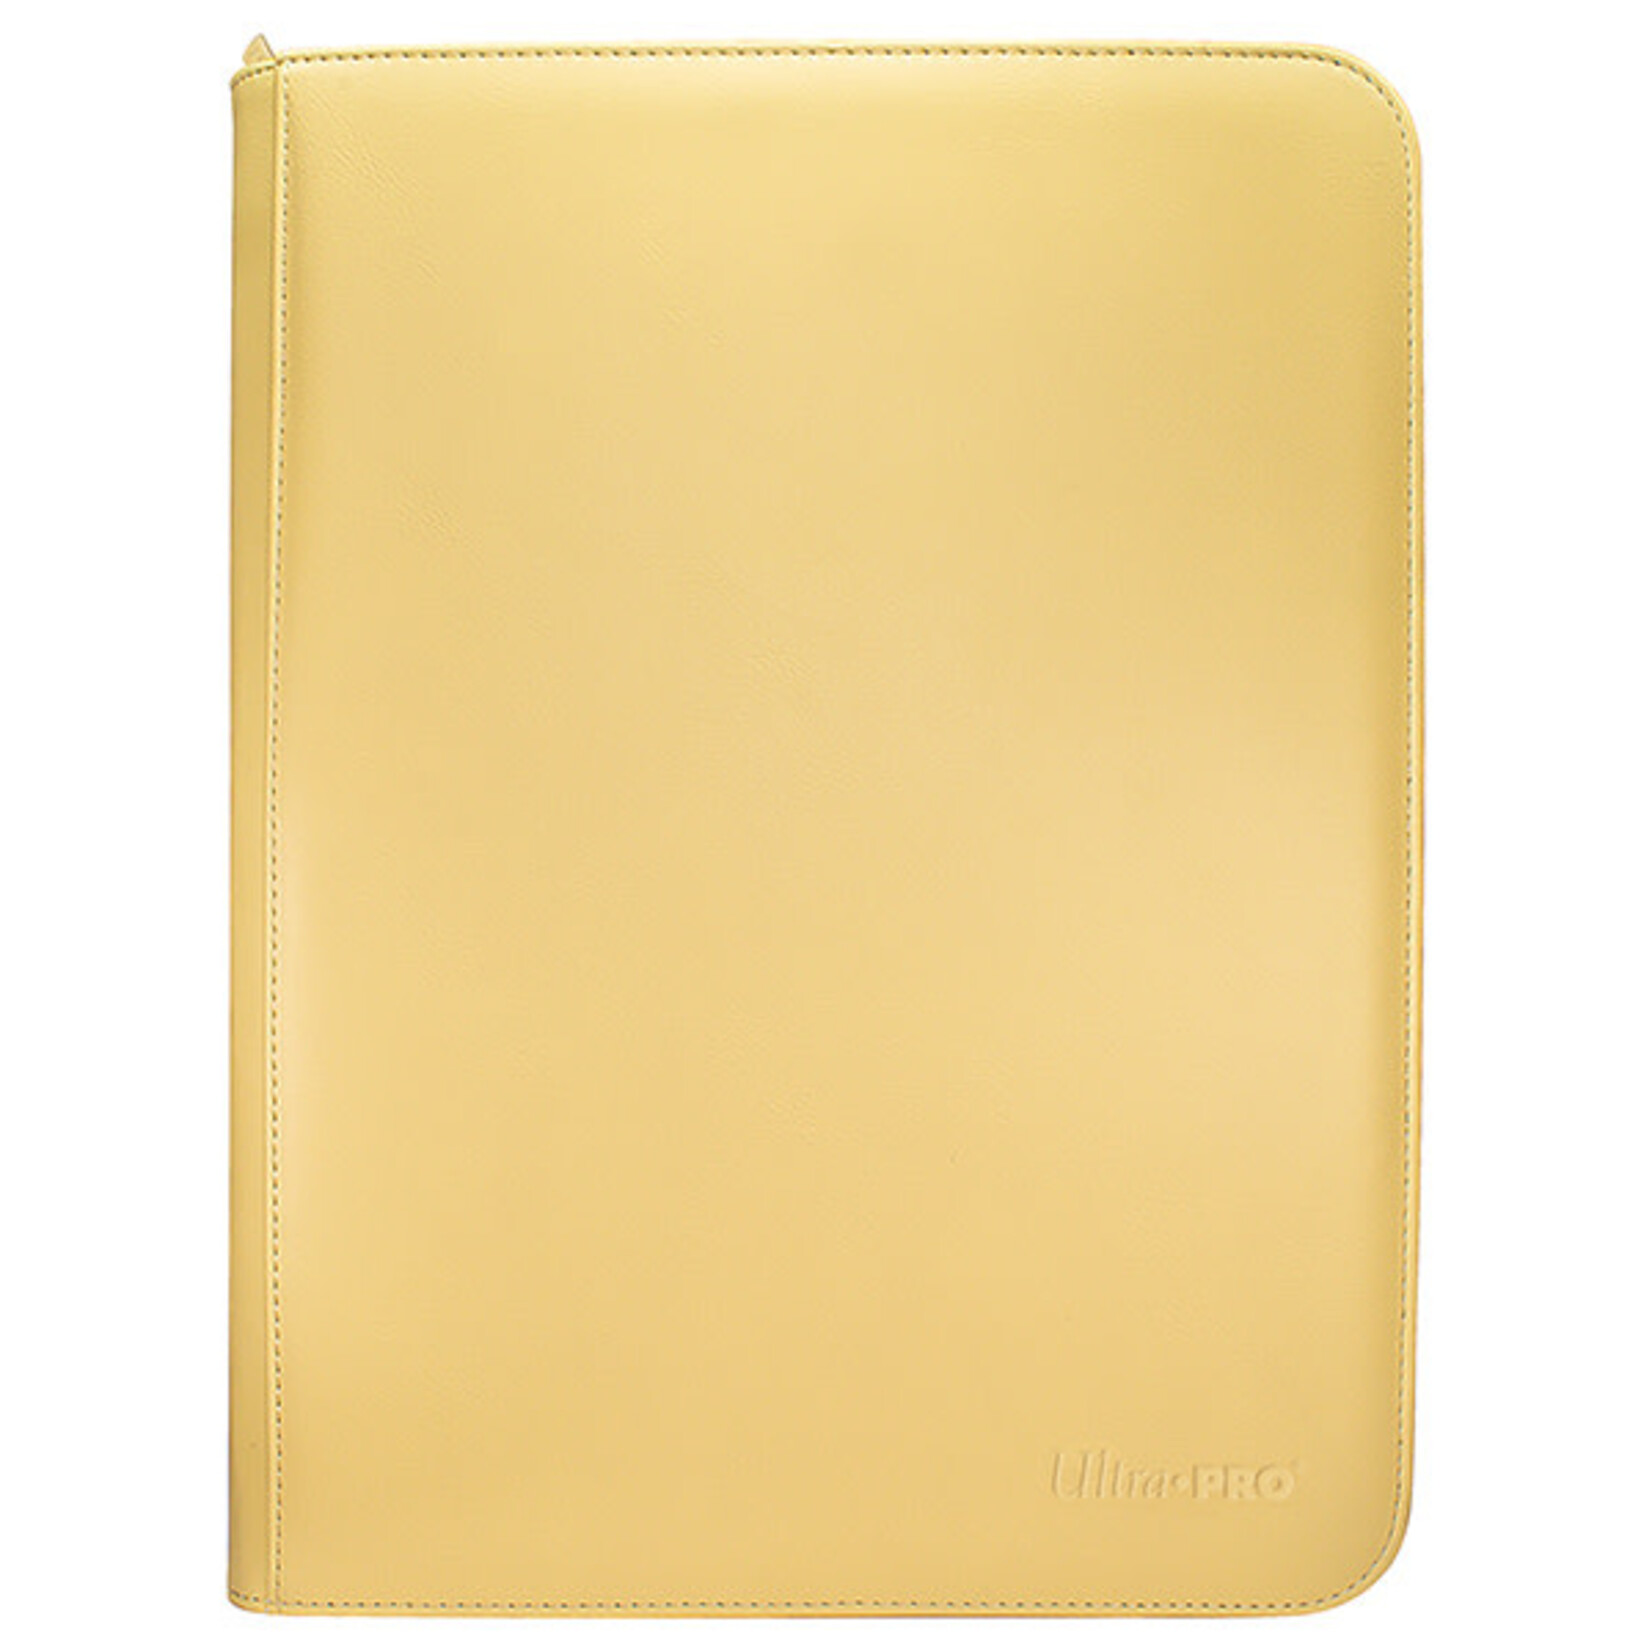 Ultra Pro 9-Pocket PRO Zippered Vivid Deluxe Binder (Yellow)